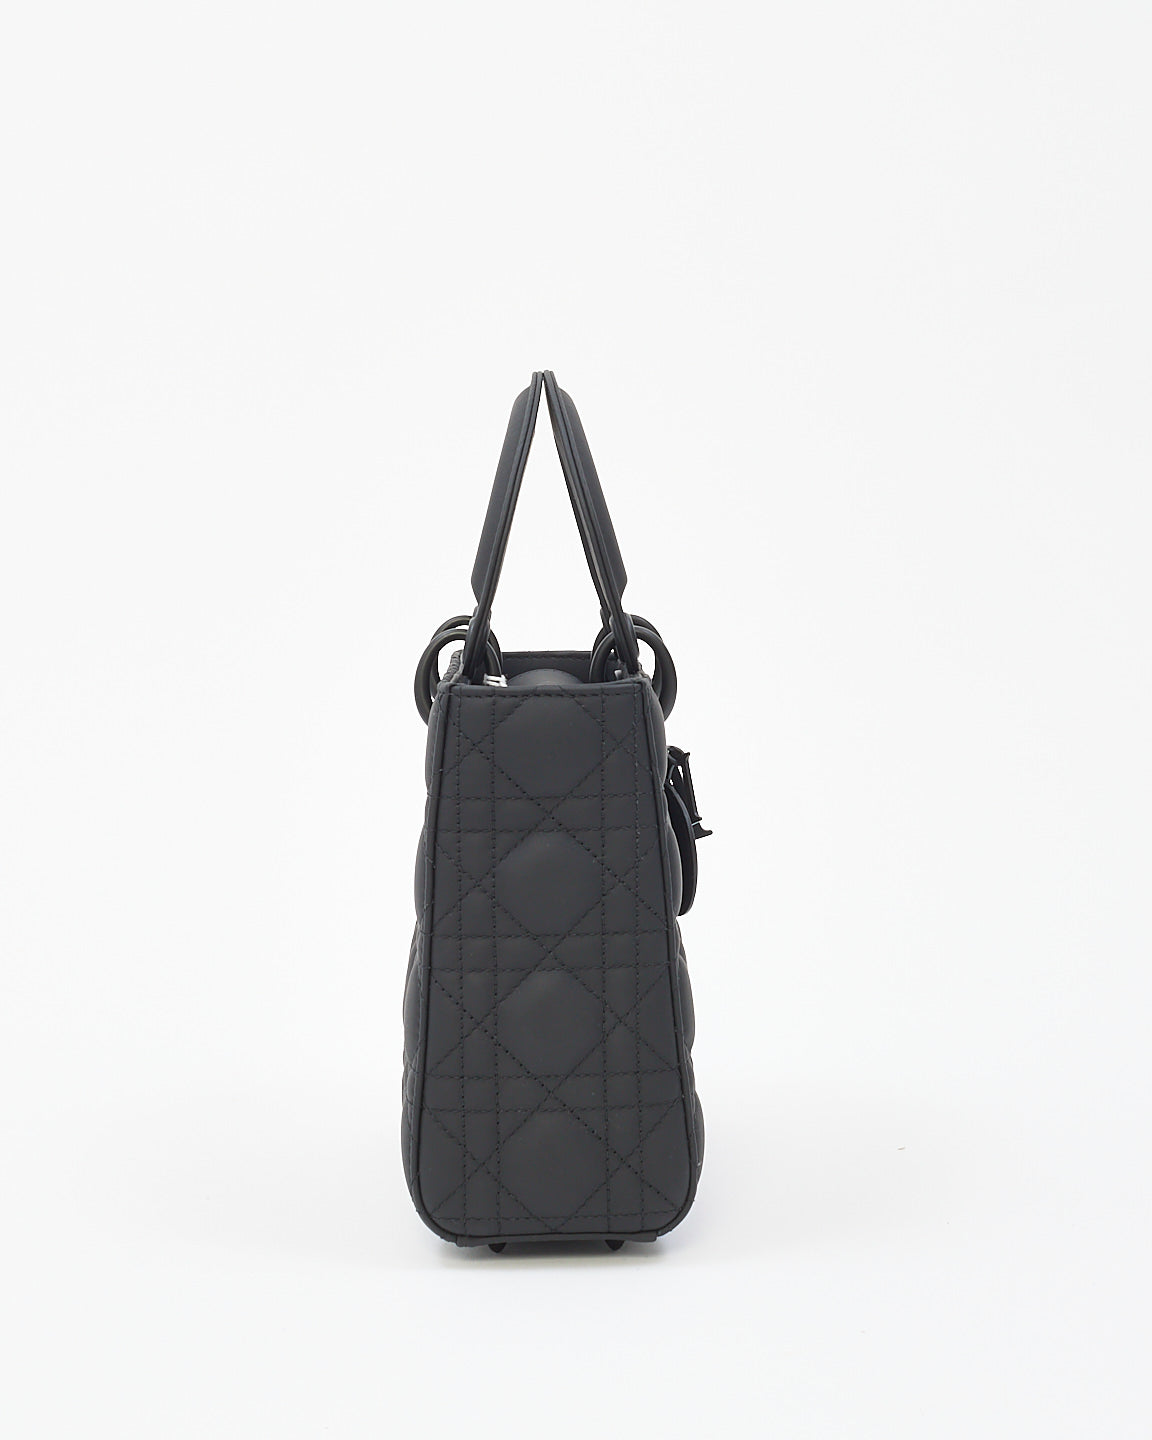 Dior Black Matte Leather Small Lady ABCDior Bag - NO STRAP